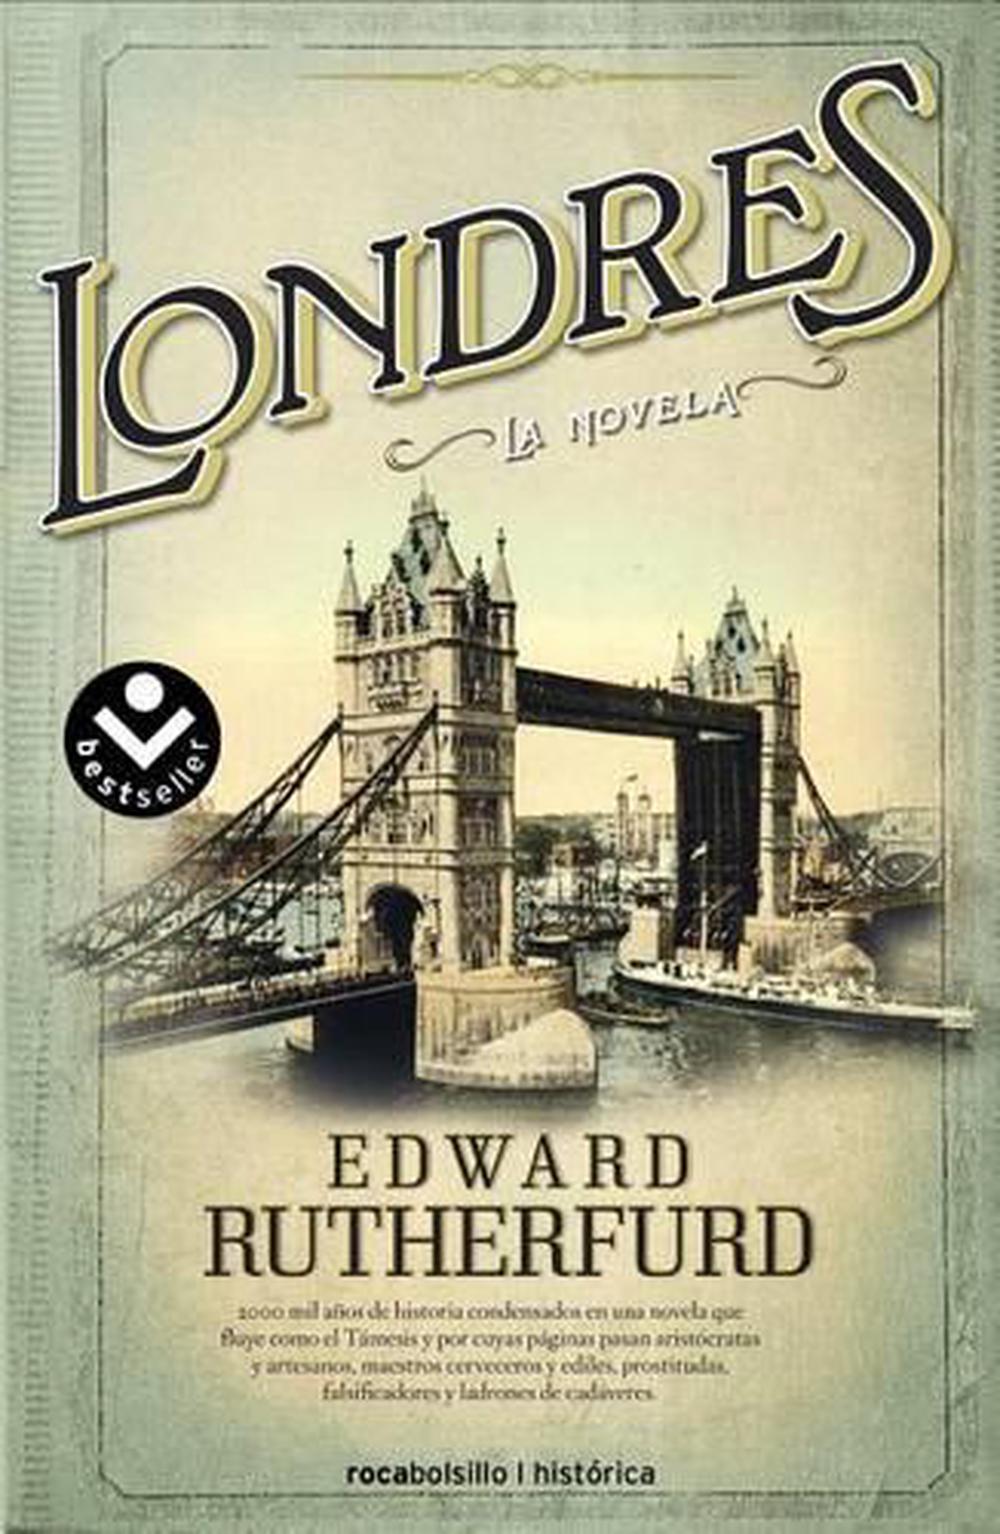 london by edward rutherfurd summary